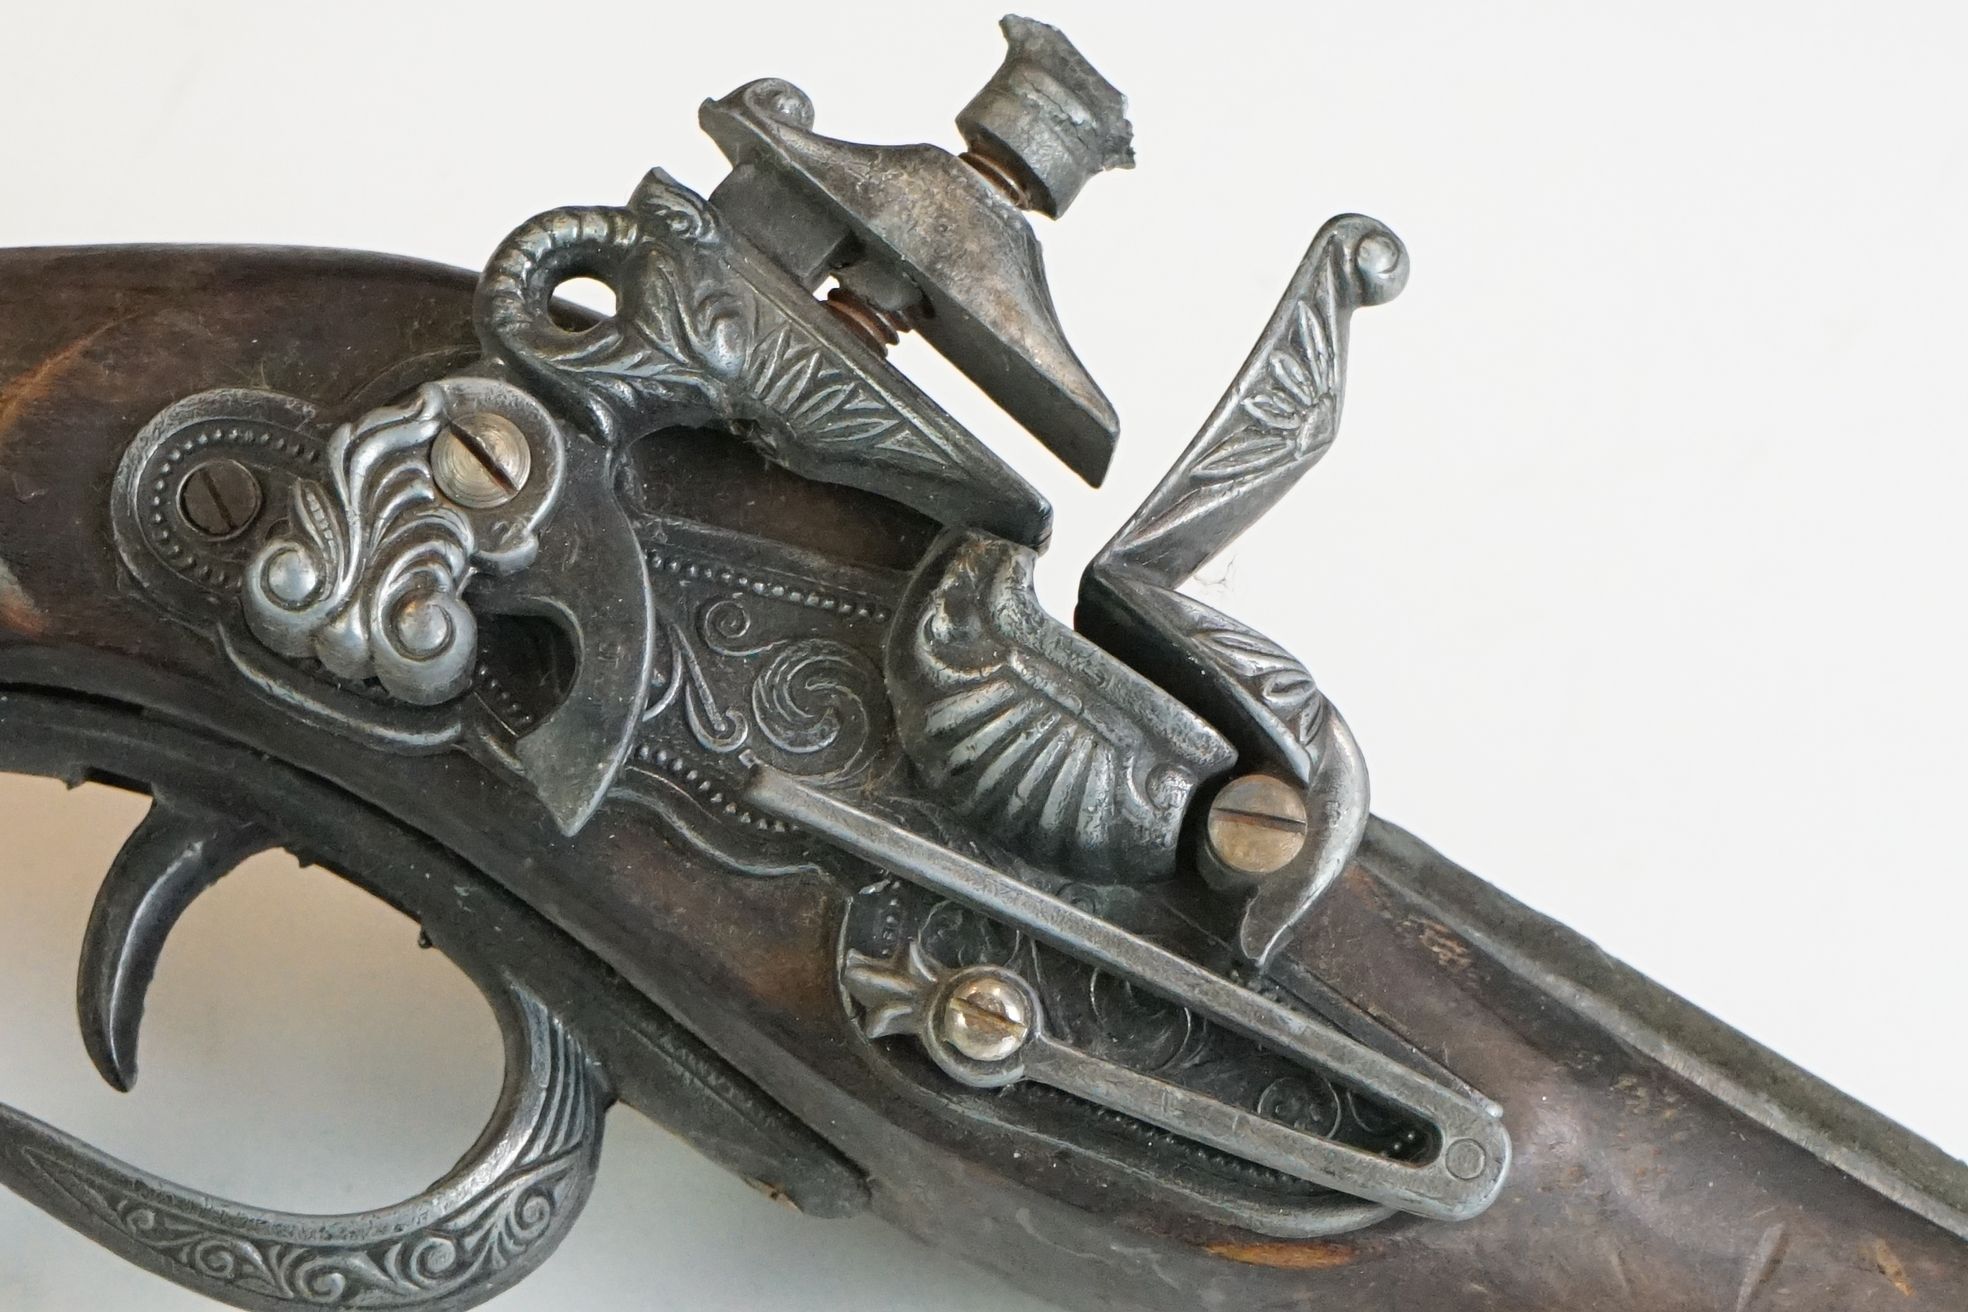 Pair of vintage replica flintlock pistols - Image 8 of 11